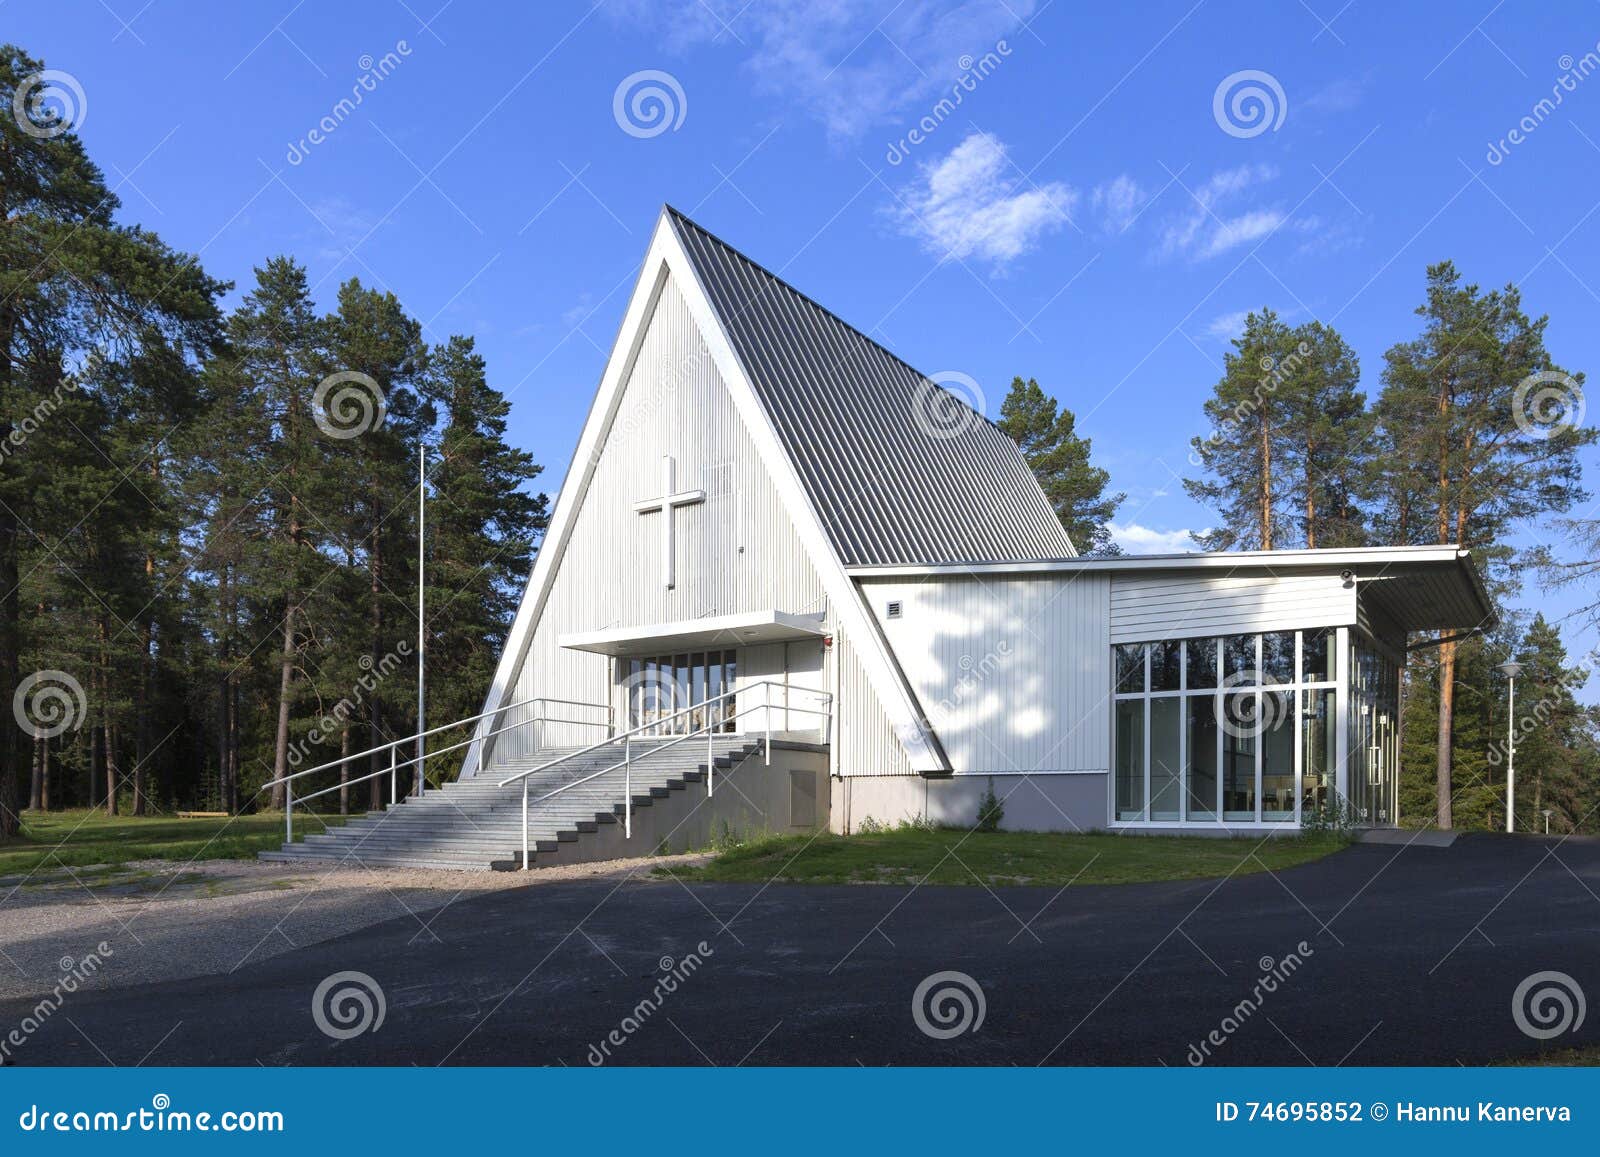 borderland church